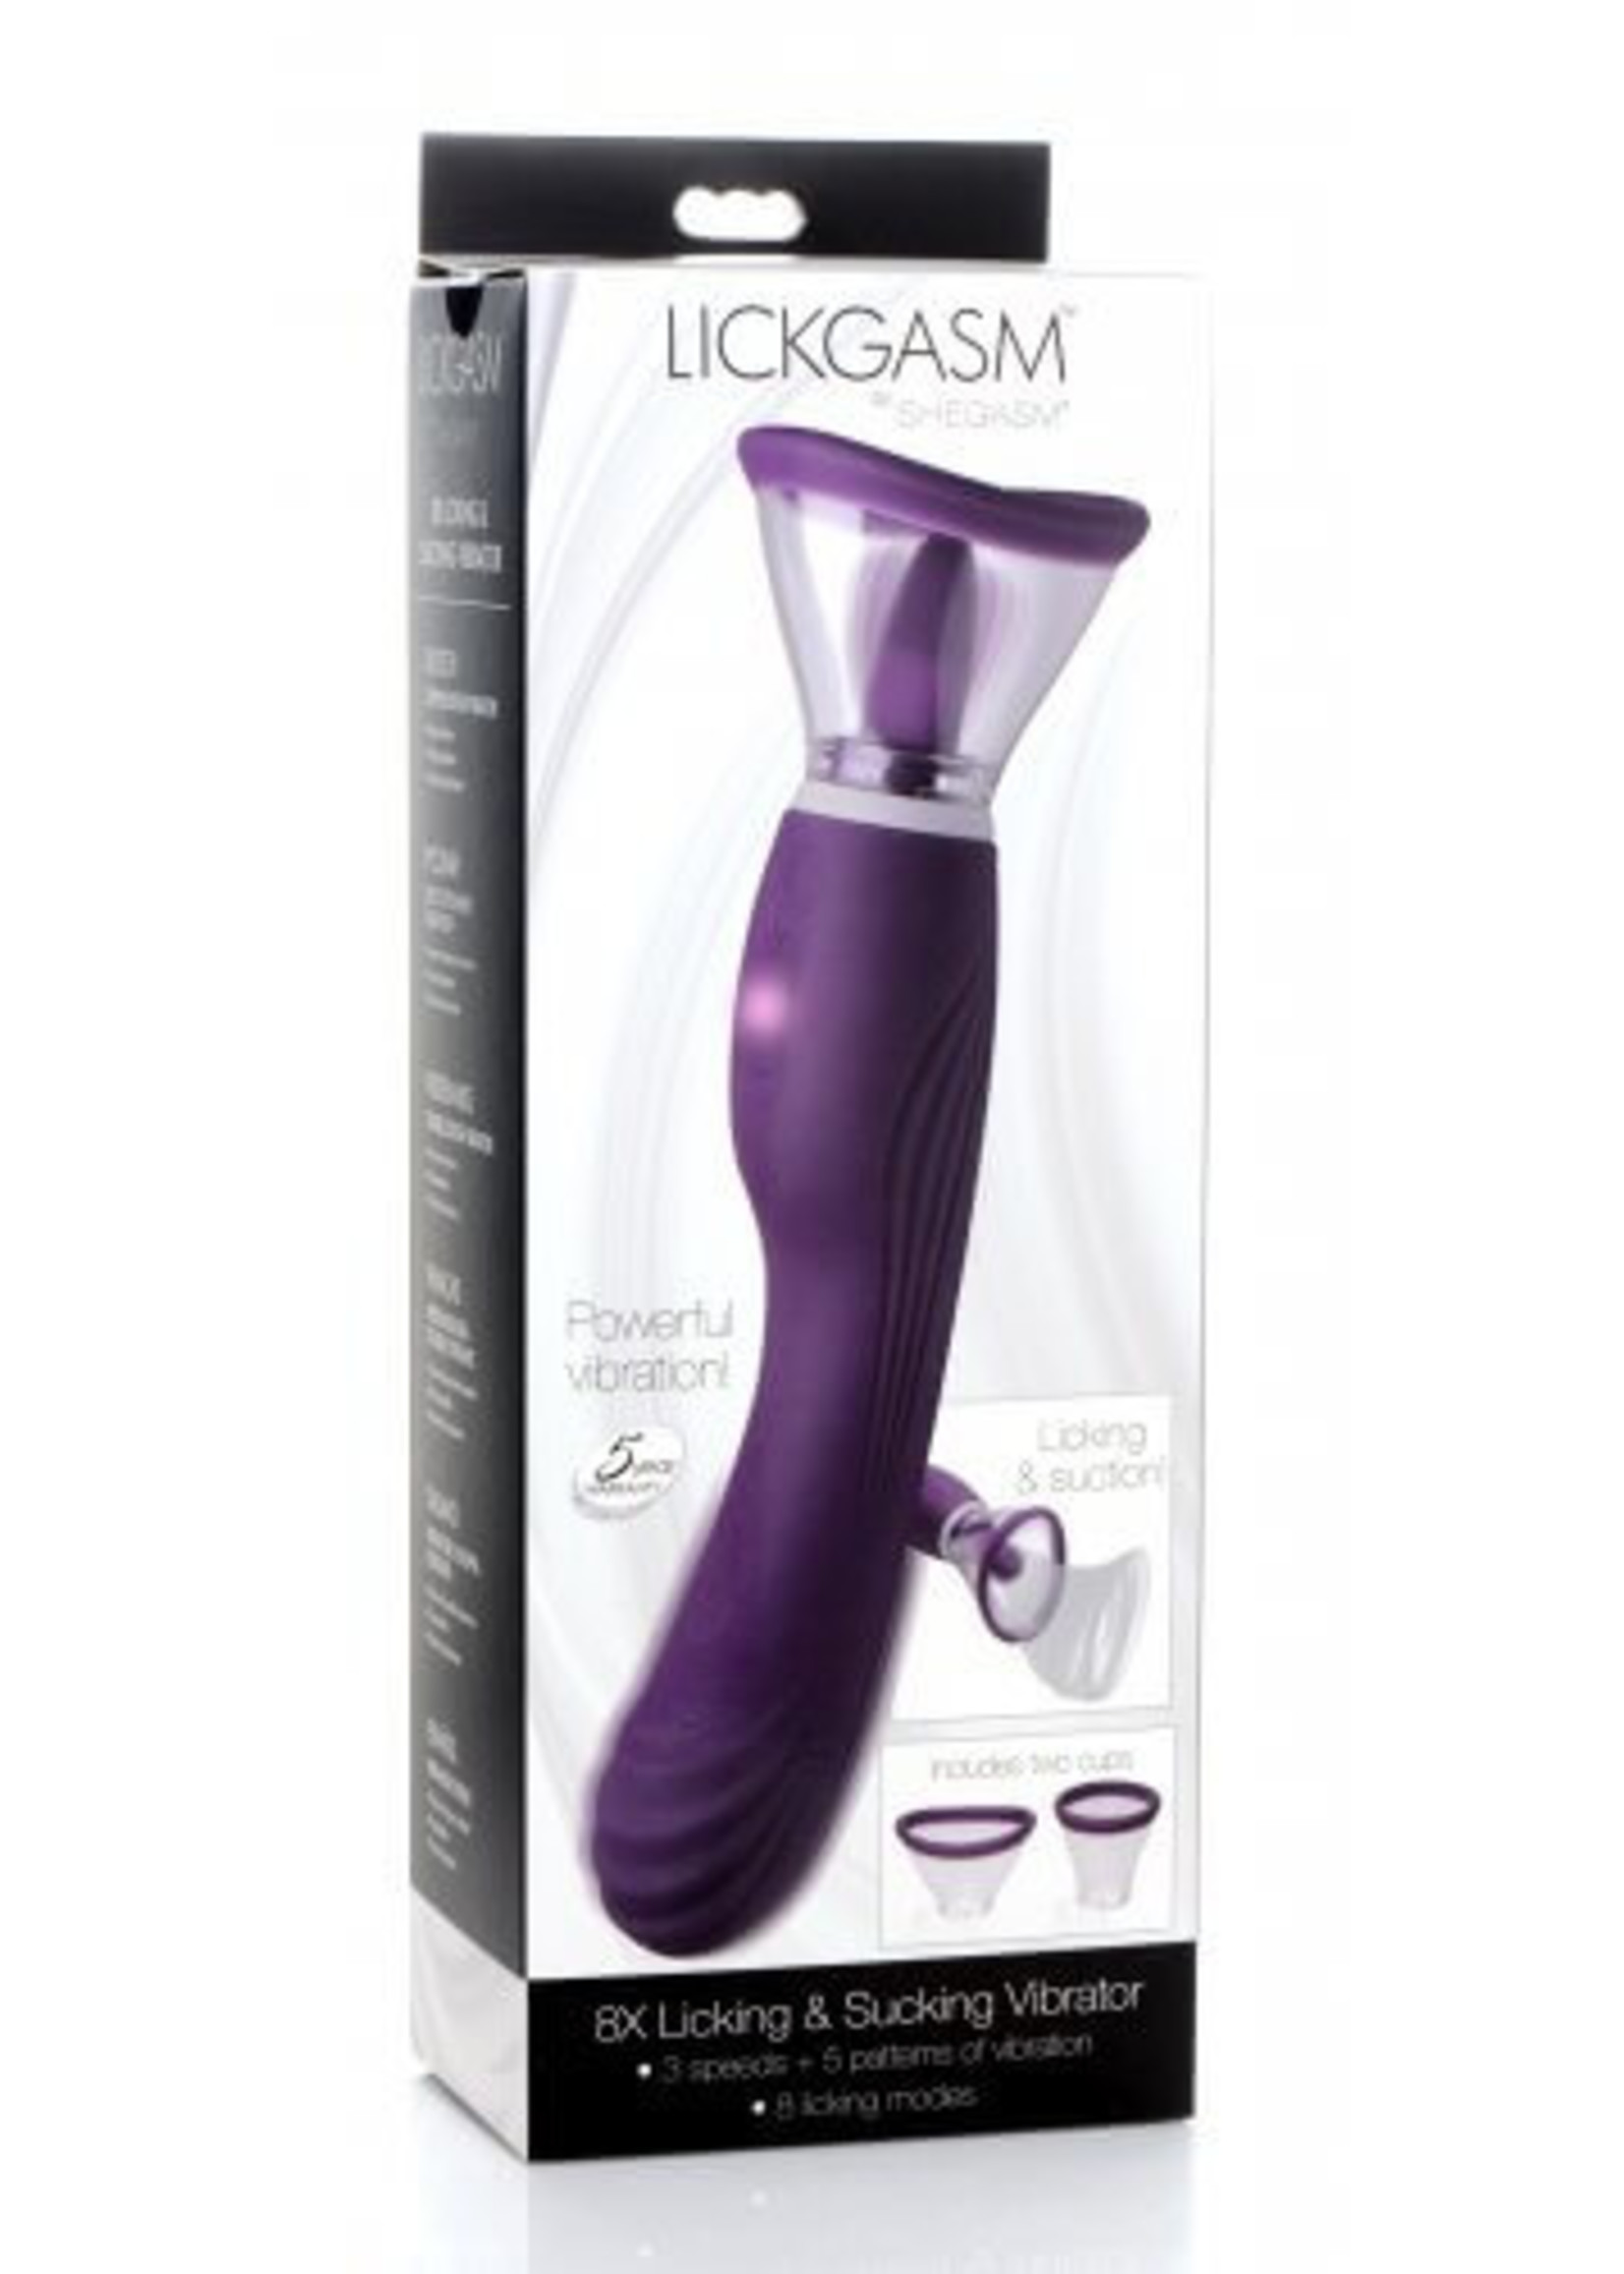 Shegasm- Lickgasm 8X- Licking and Sucking Vibrator